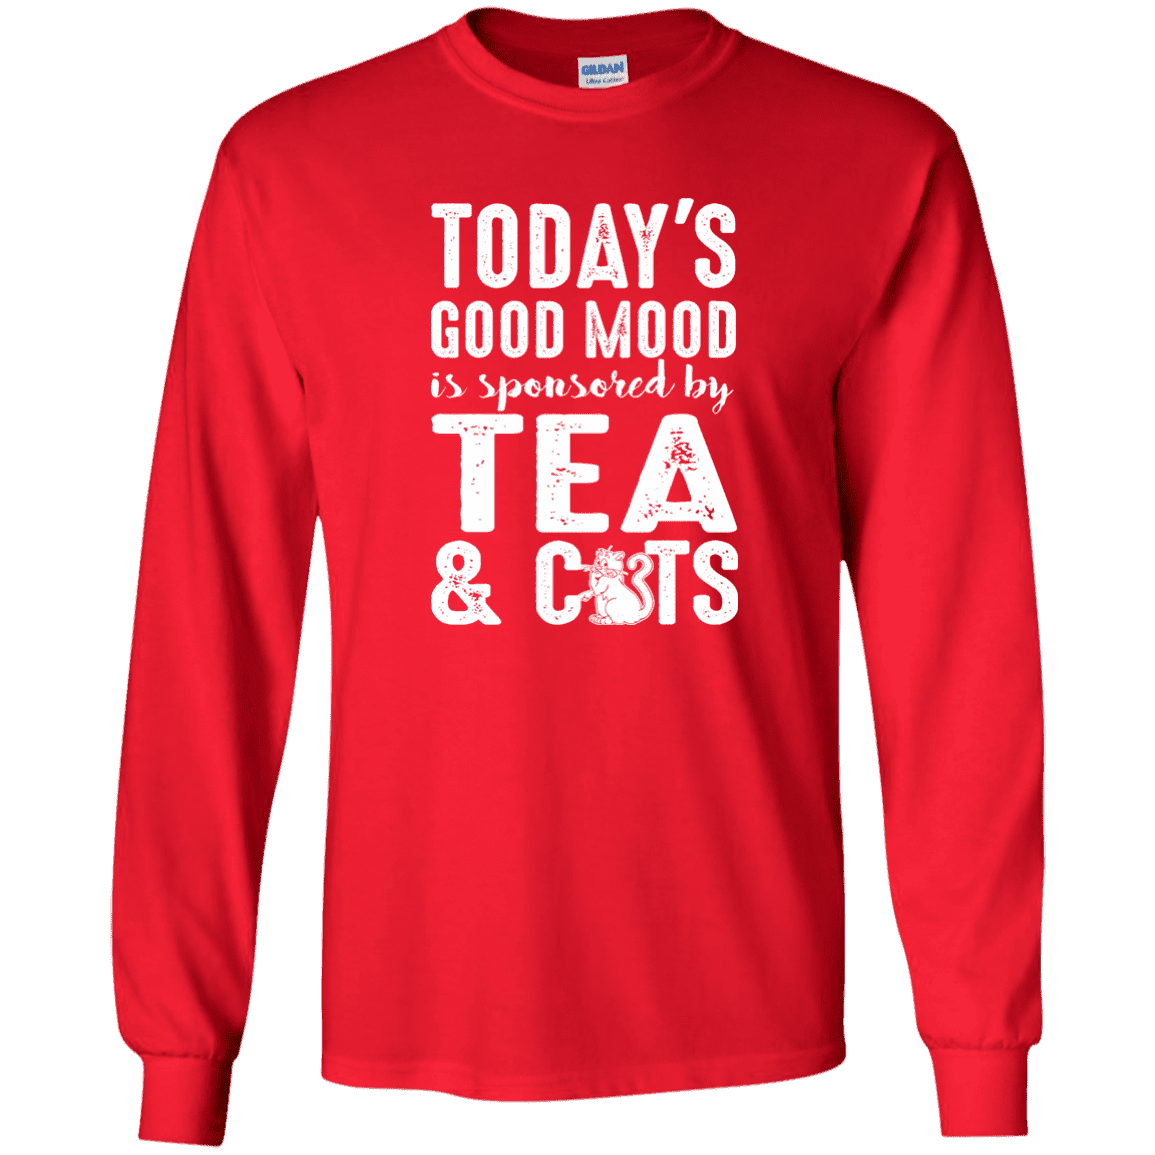 Today's Good Mood Tea & Cats - Long Sleeve T Shirt.